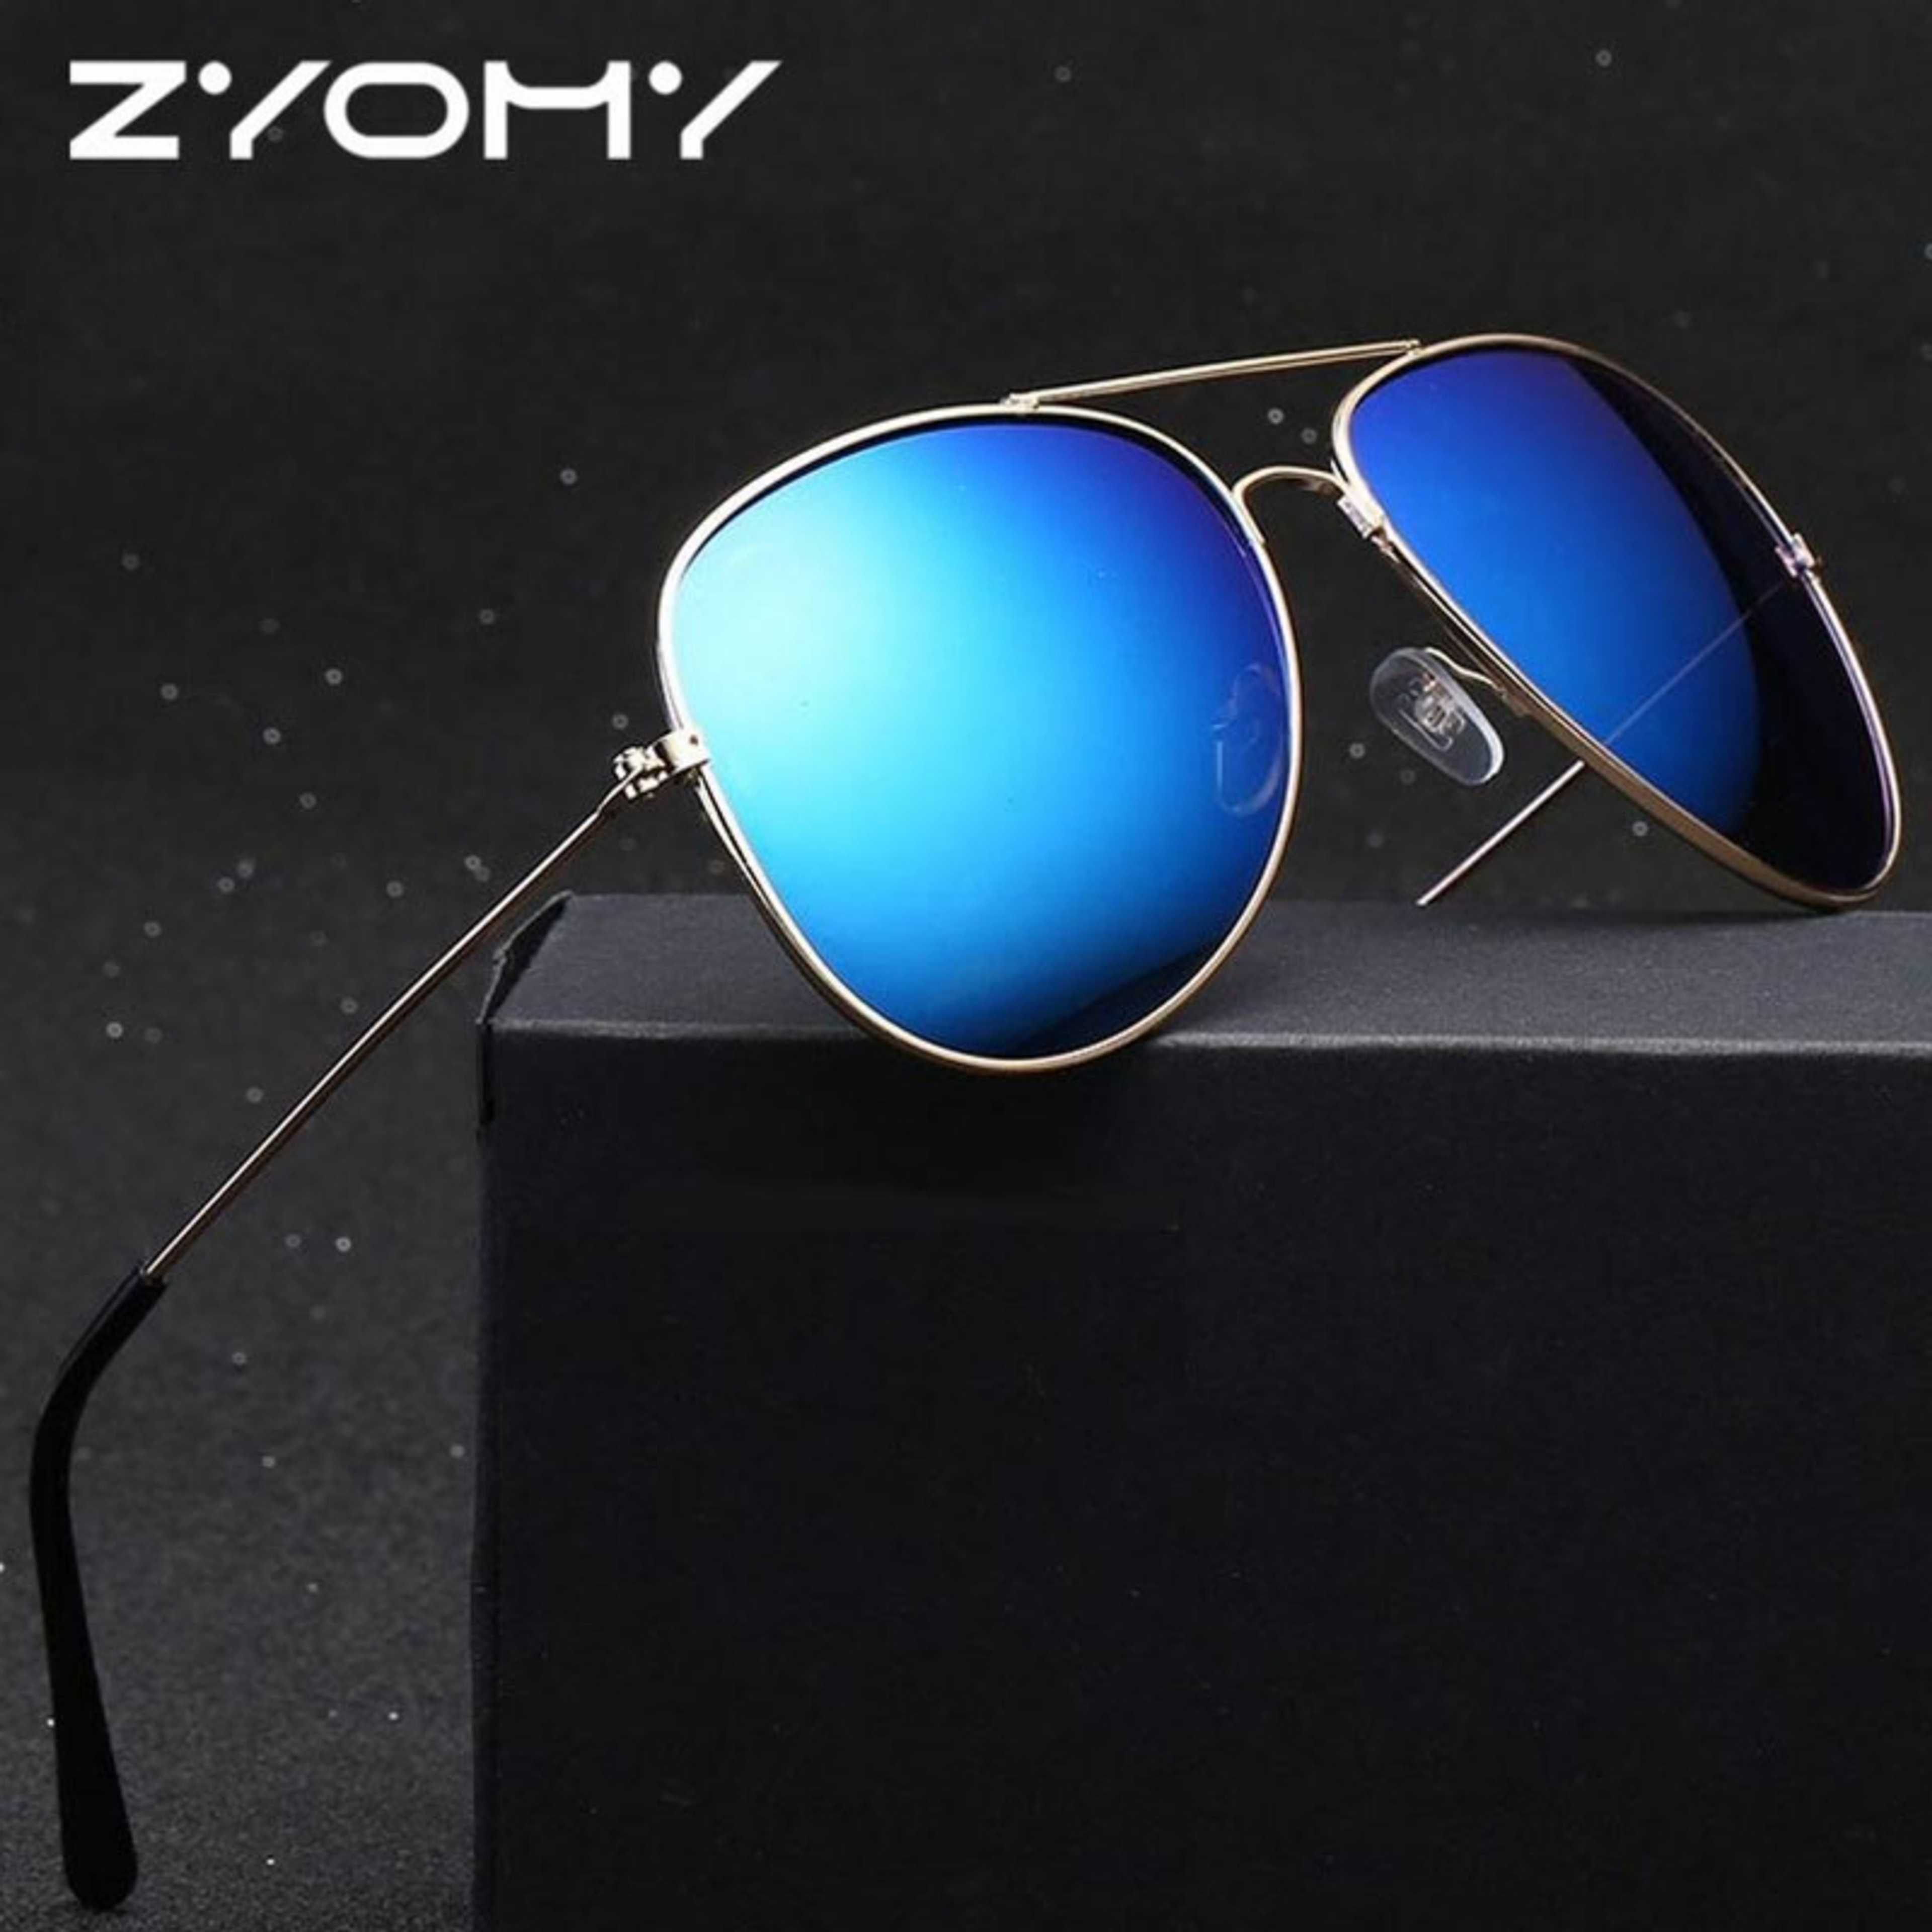 Aviator Style Sunglasses Metal Frame Double Beam Colorful - Sunglasses